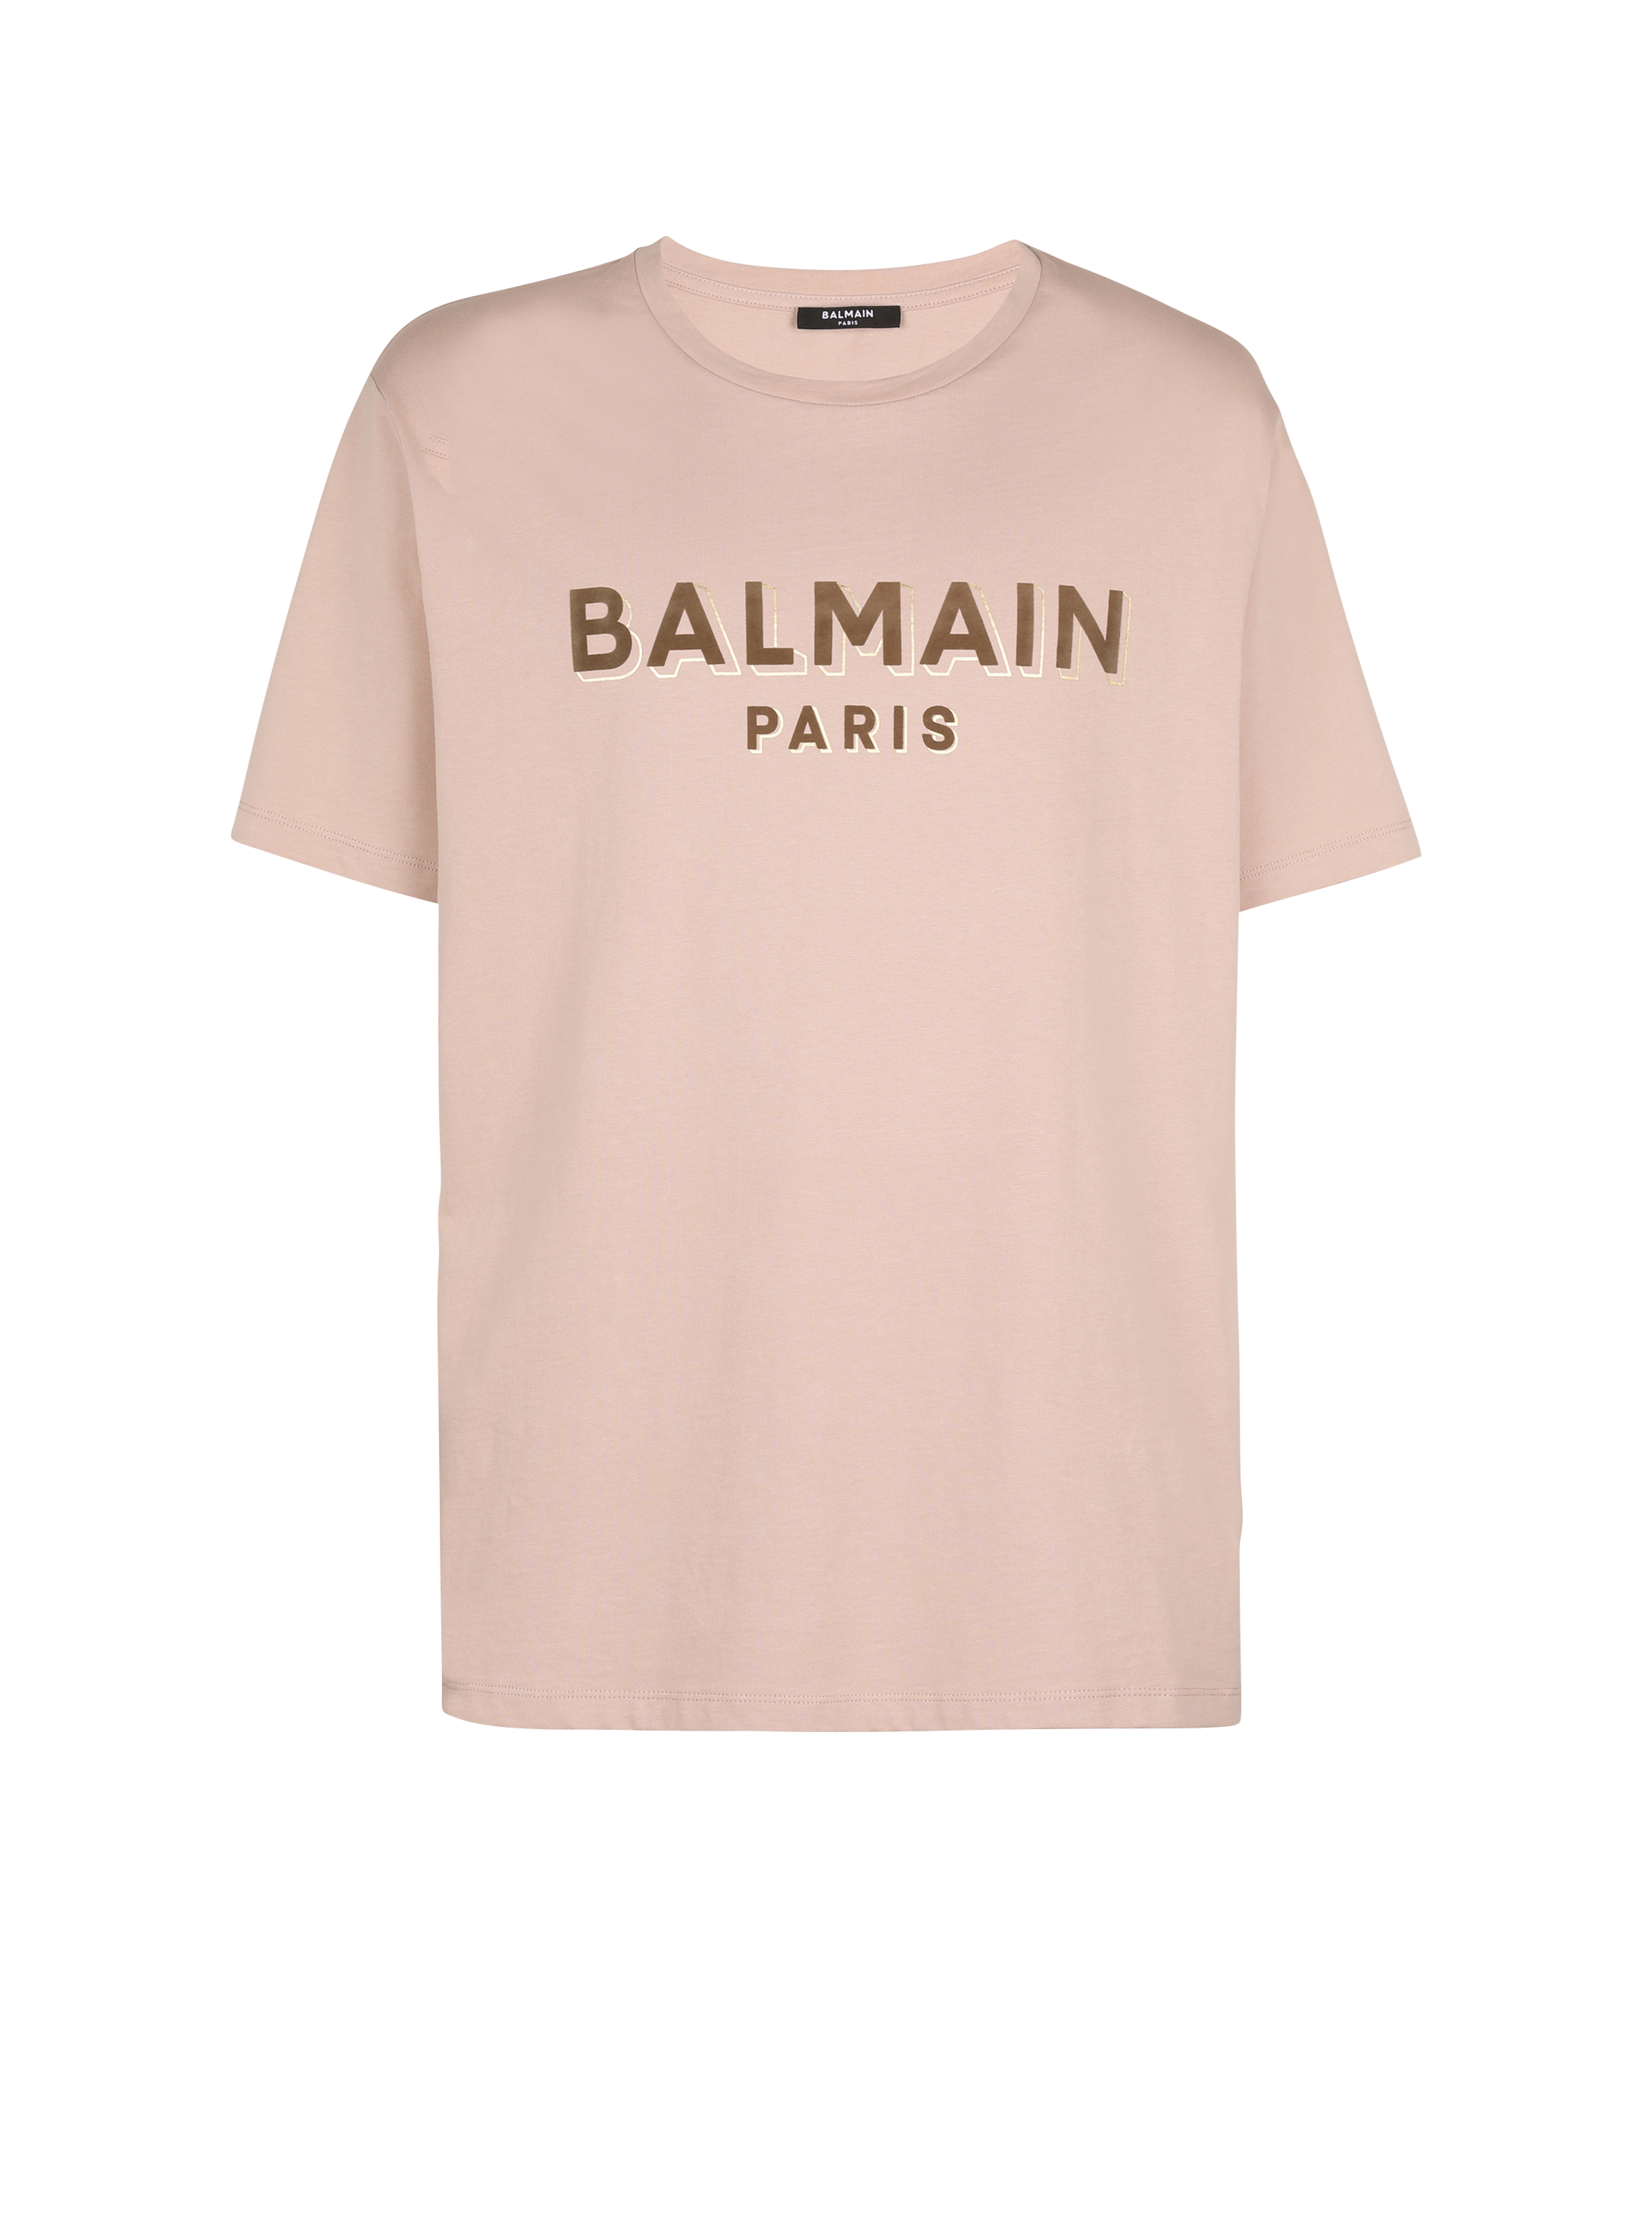 Oversize-T-Shirt mit geflocktem Balmain-Logo, braun, hi-res